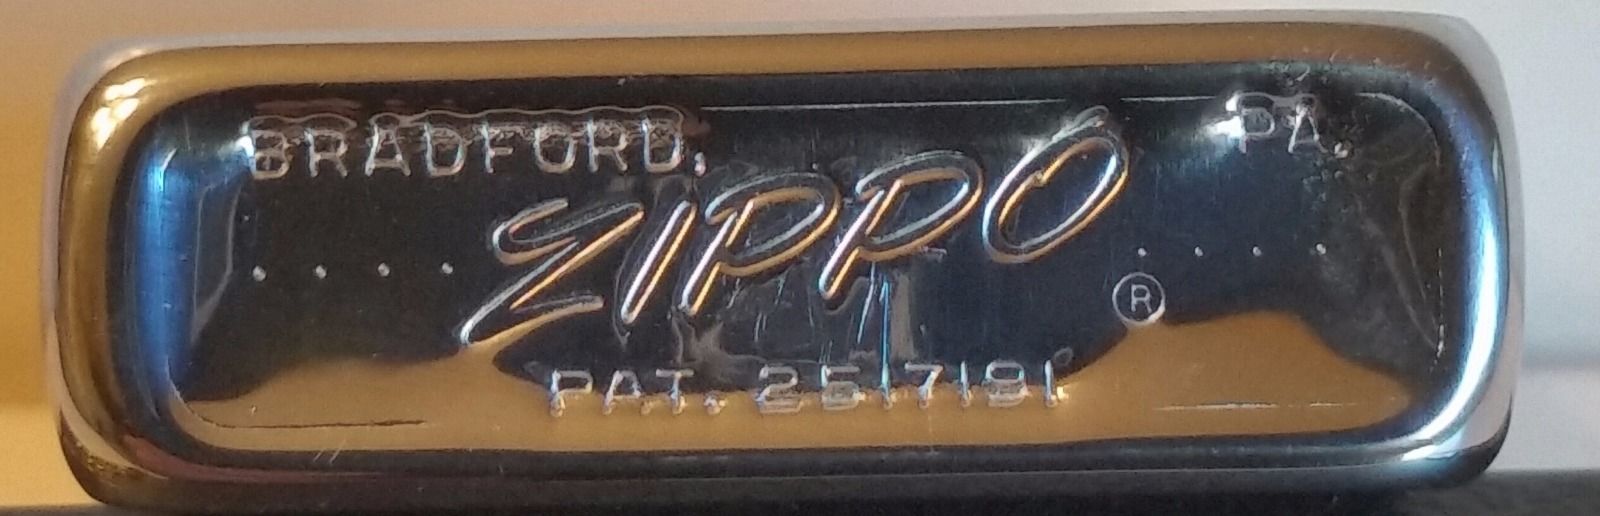 Zippo lighter no 200 Brused Chrome Lighter 1958 RARE box vintage